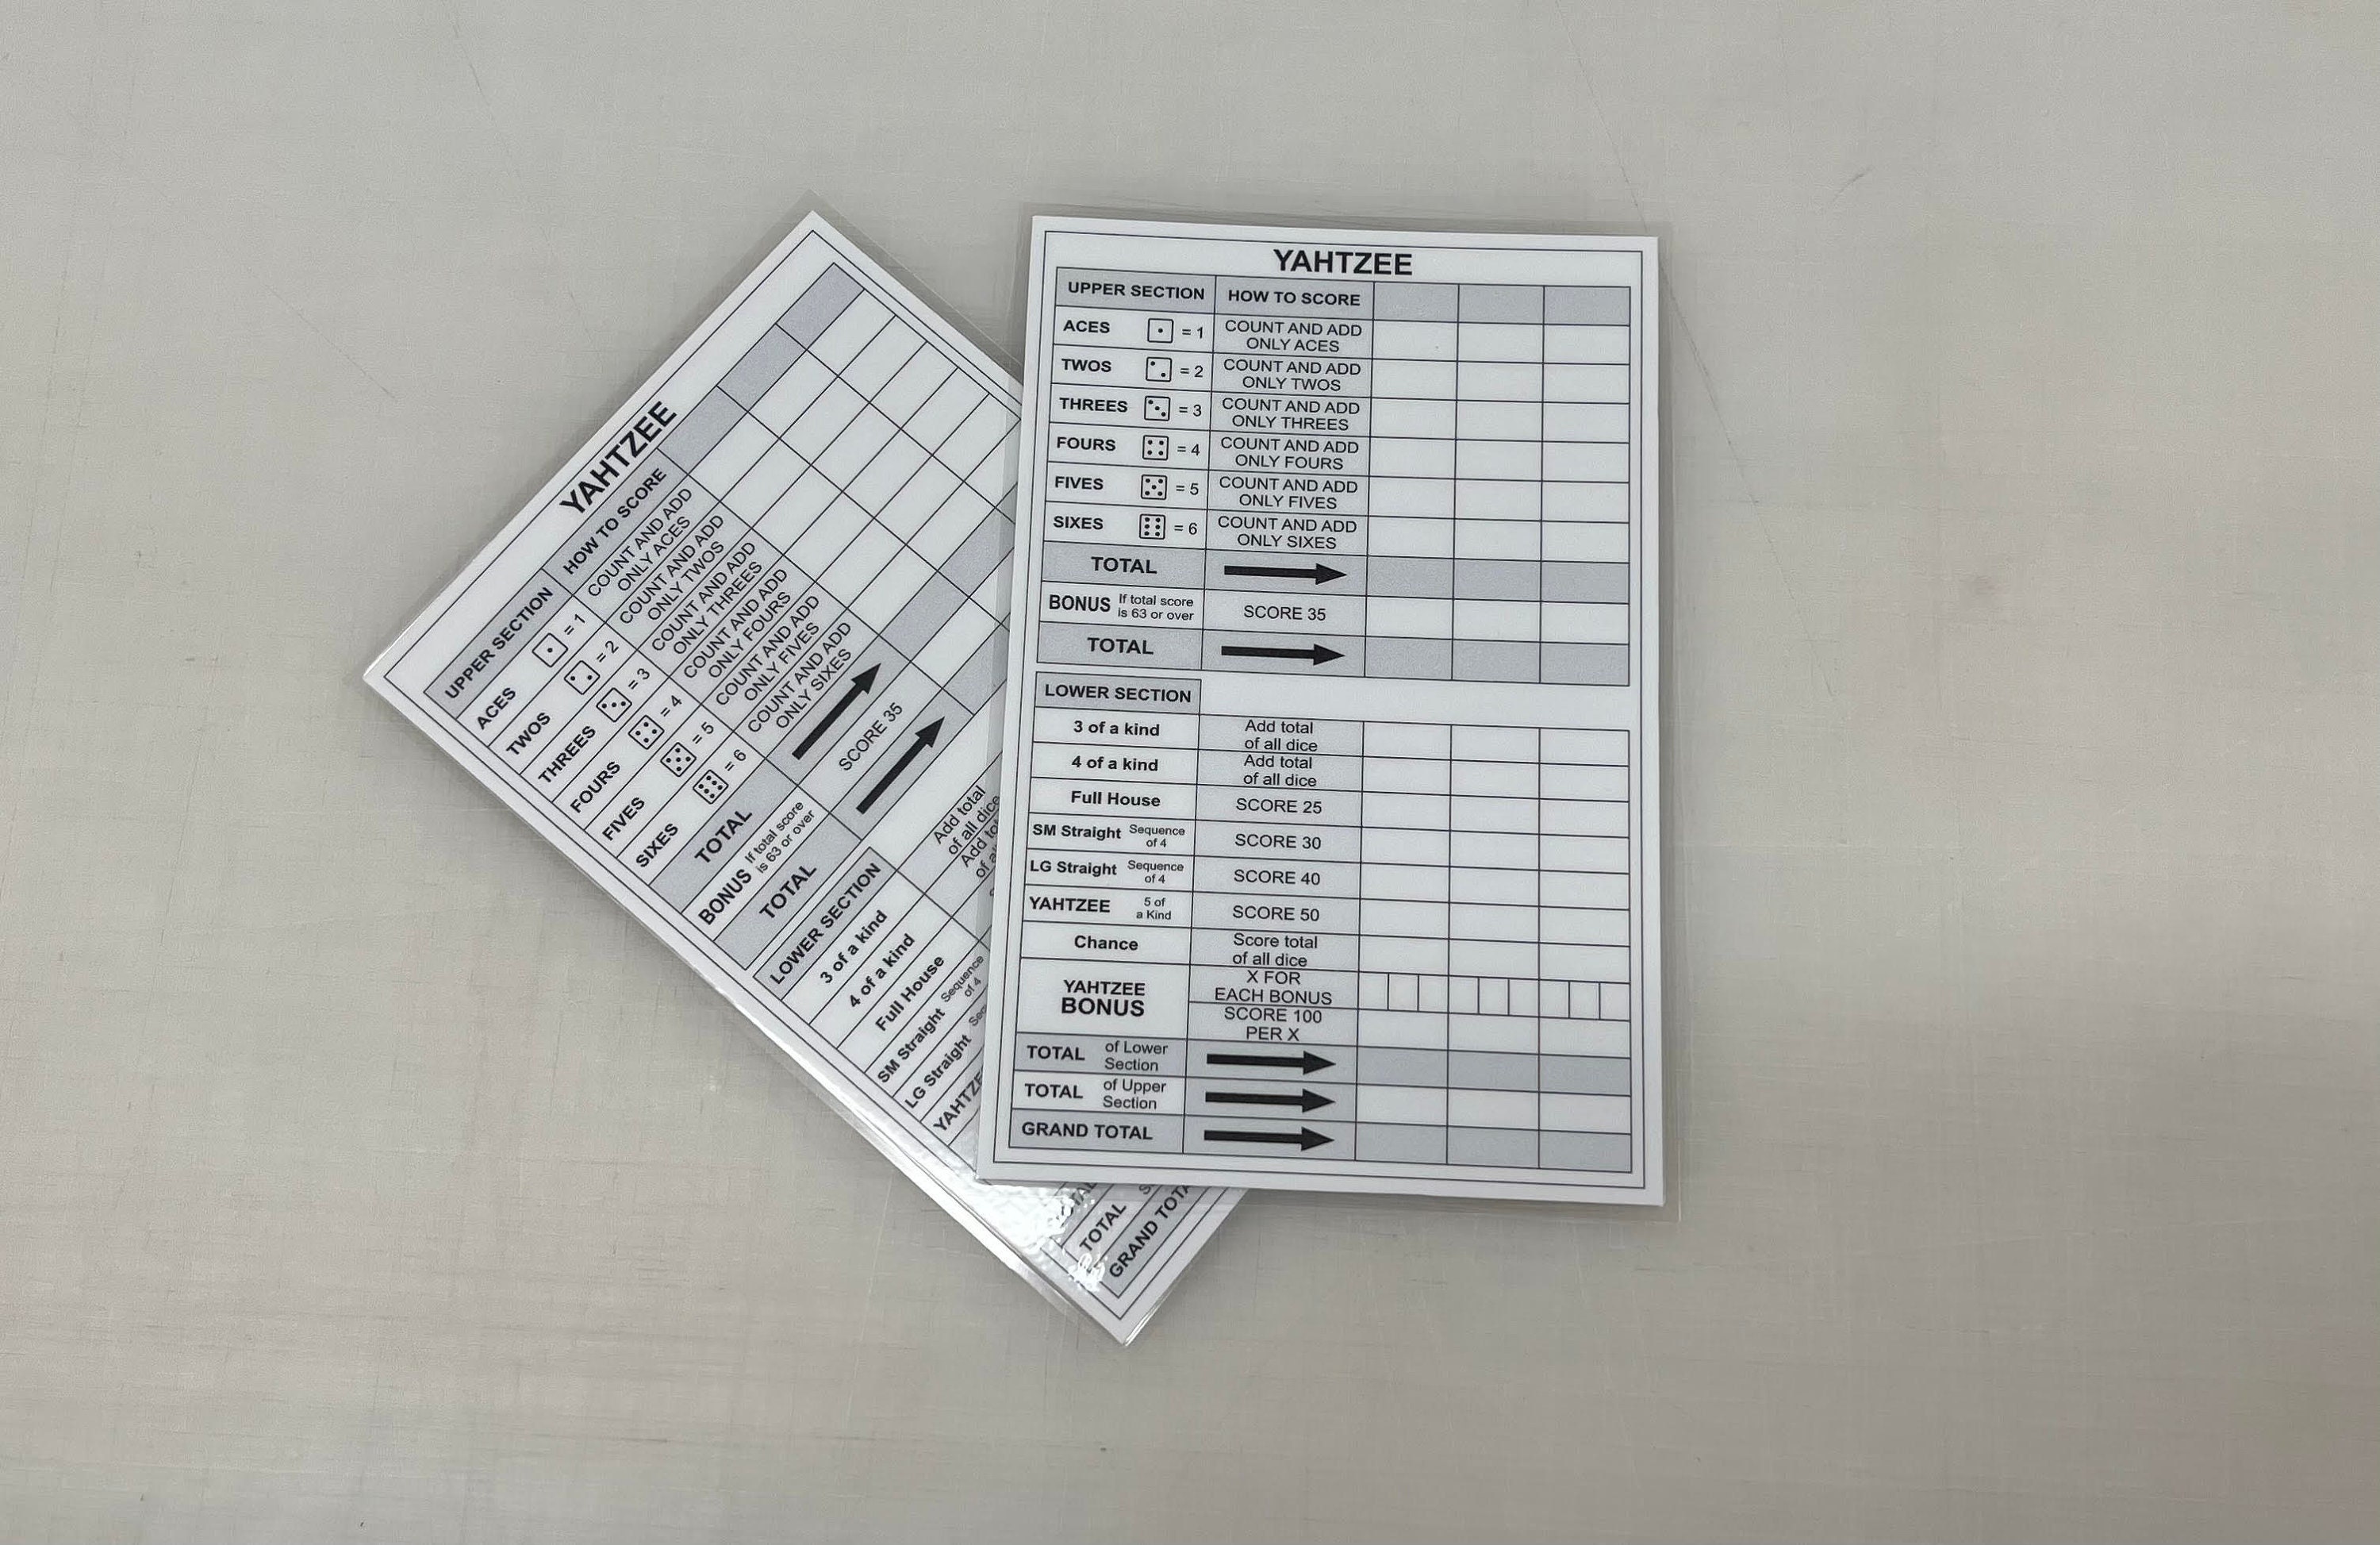 Printable Qwixx Dice Game Scoresheets, Quixx dice game, score card